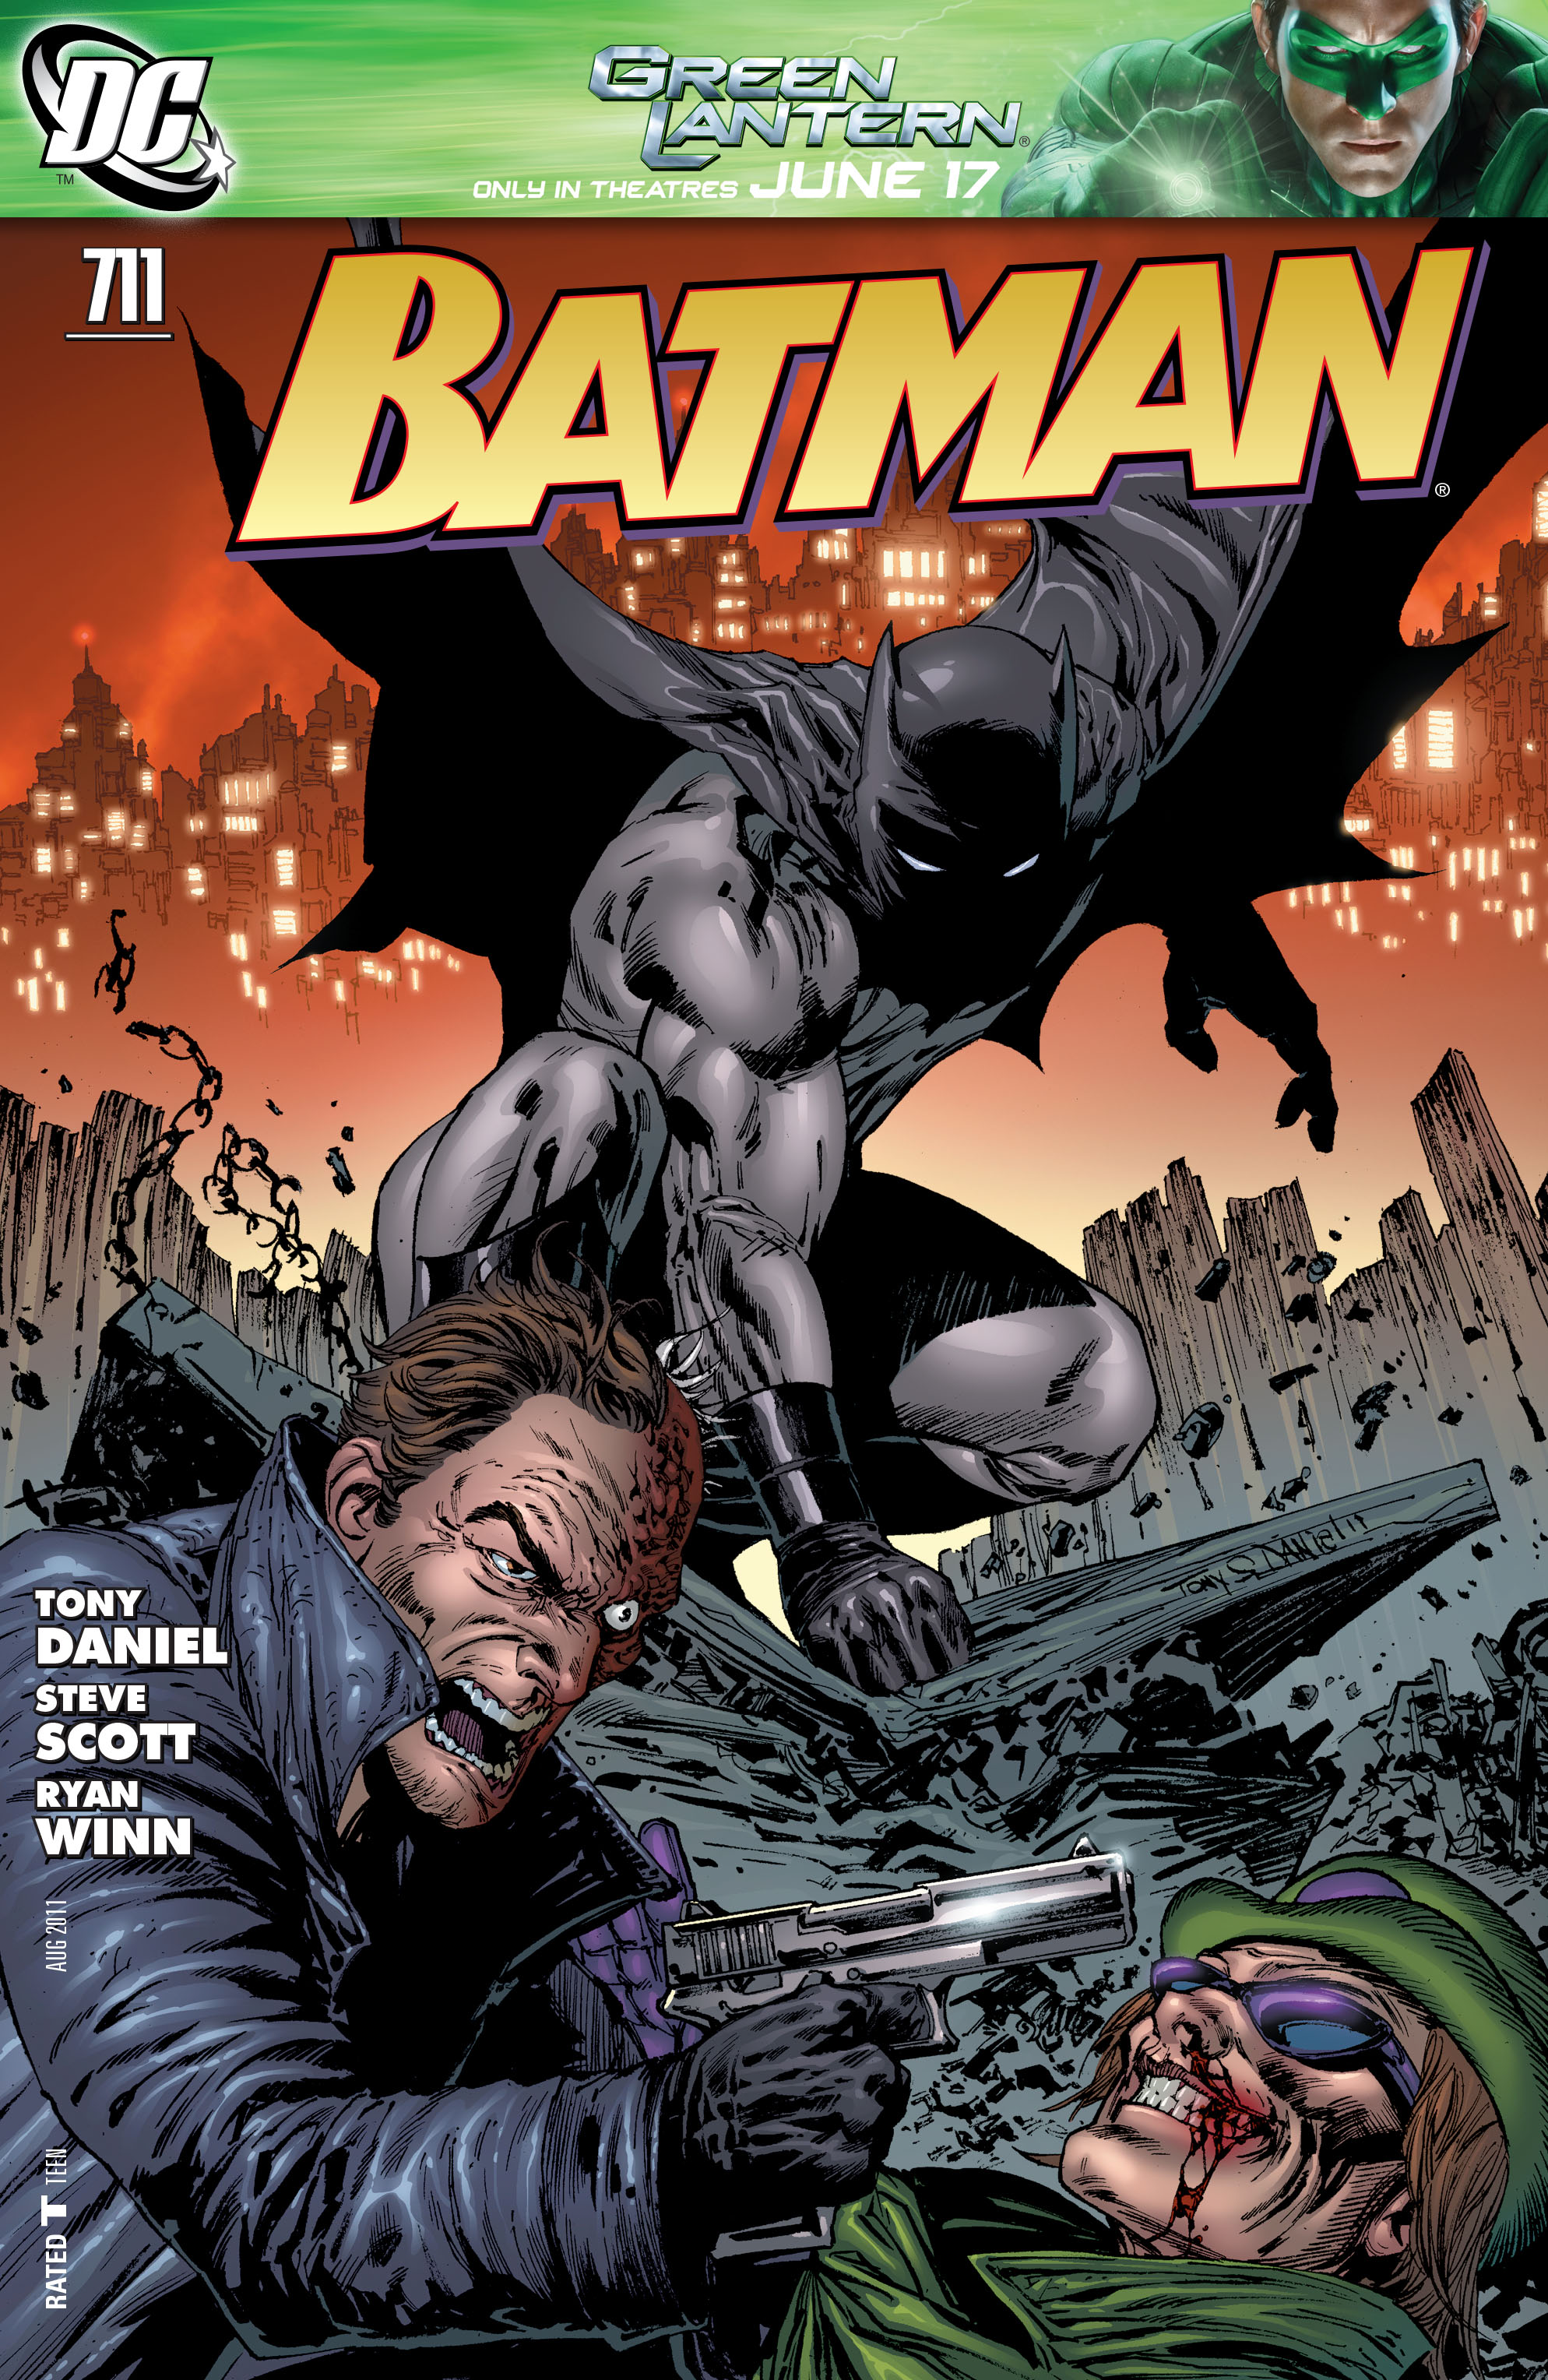 Read online Batman (1940) comic -  Issue #711 - 1